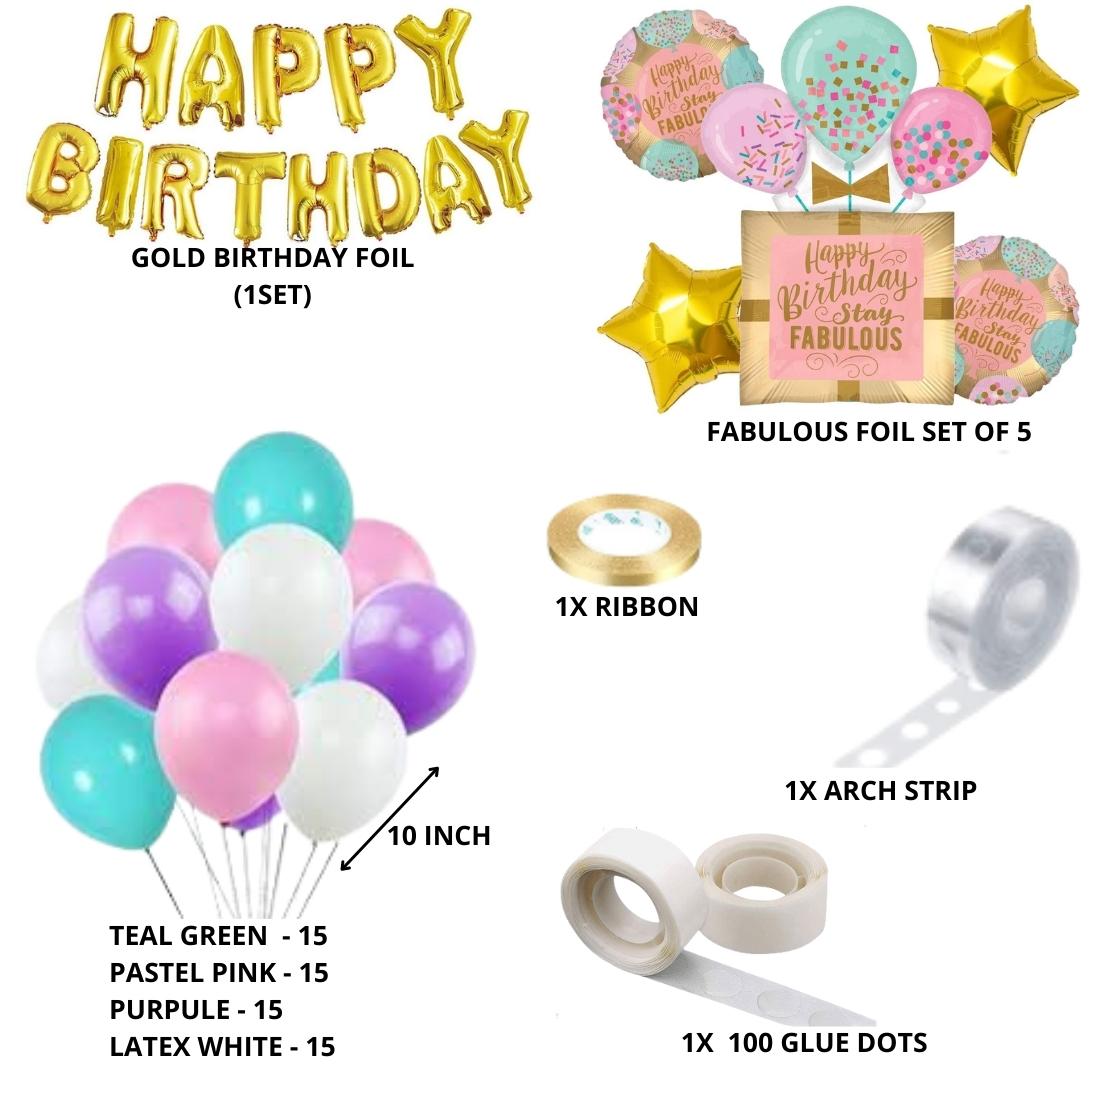 Stay Fabulous Birthday Decoration Kit(80 Pieces)